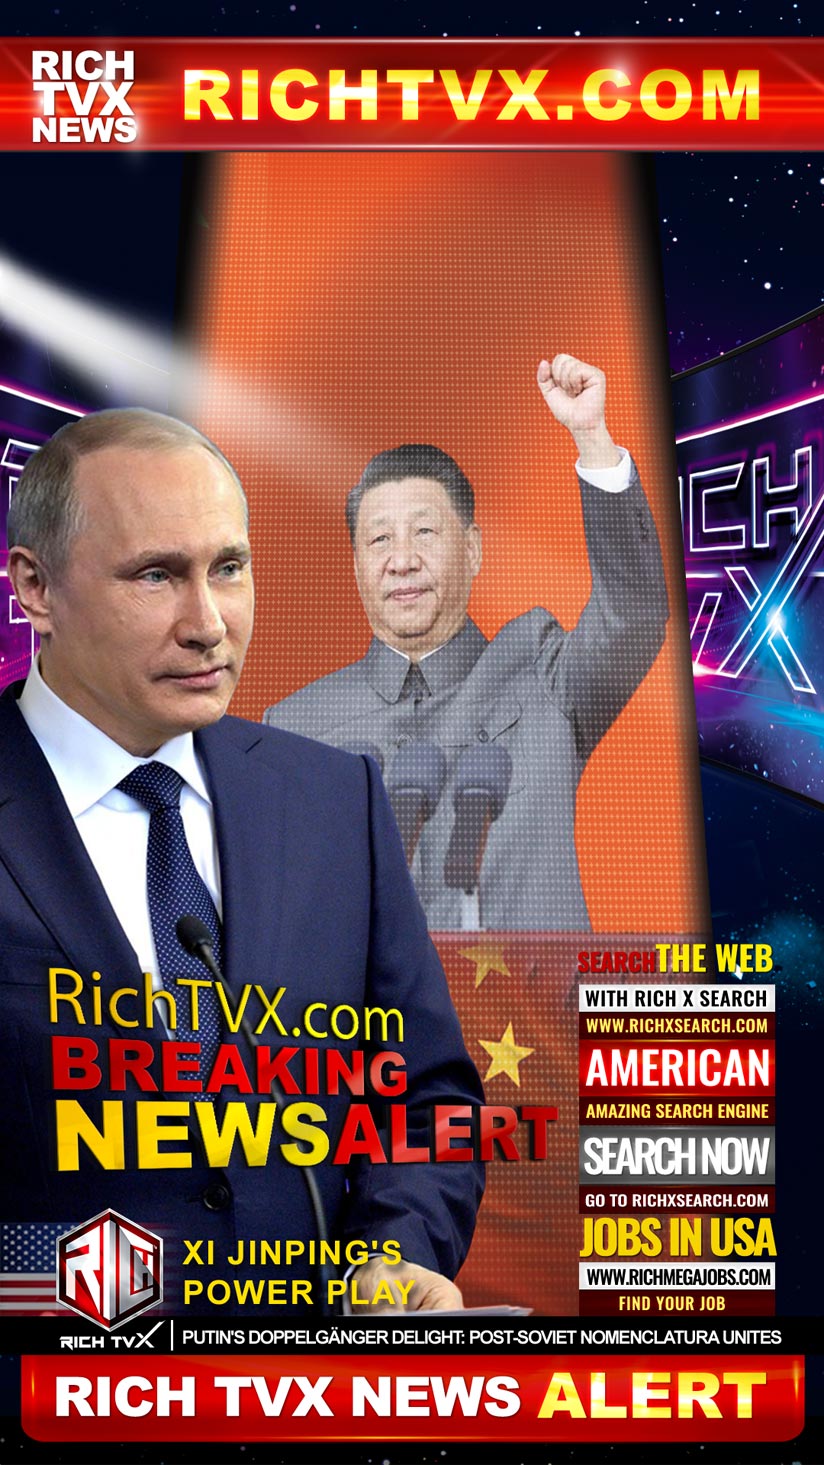 Xi Jinping’s Power Play and Putin’s Doppelgänger Delight: Post-Soviet Nomenclatura Unites